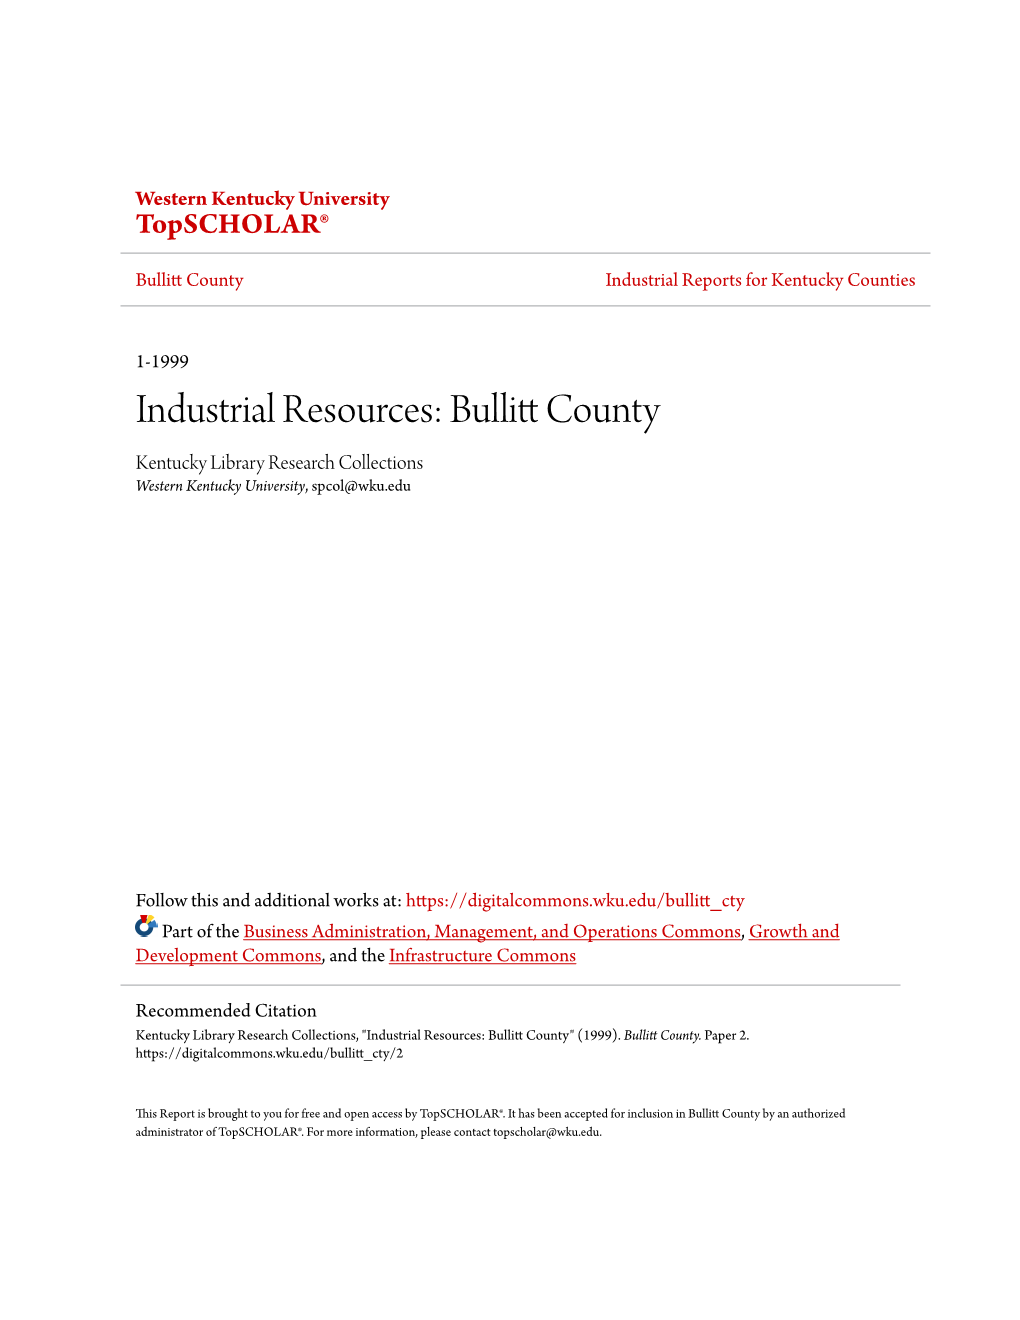 Industrial Resources: Bullitt County